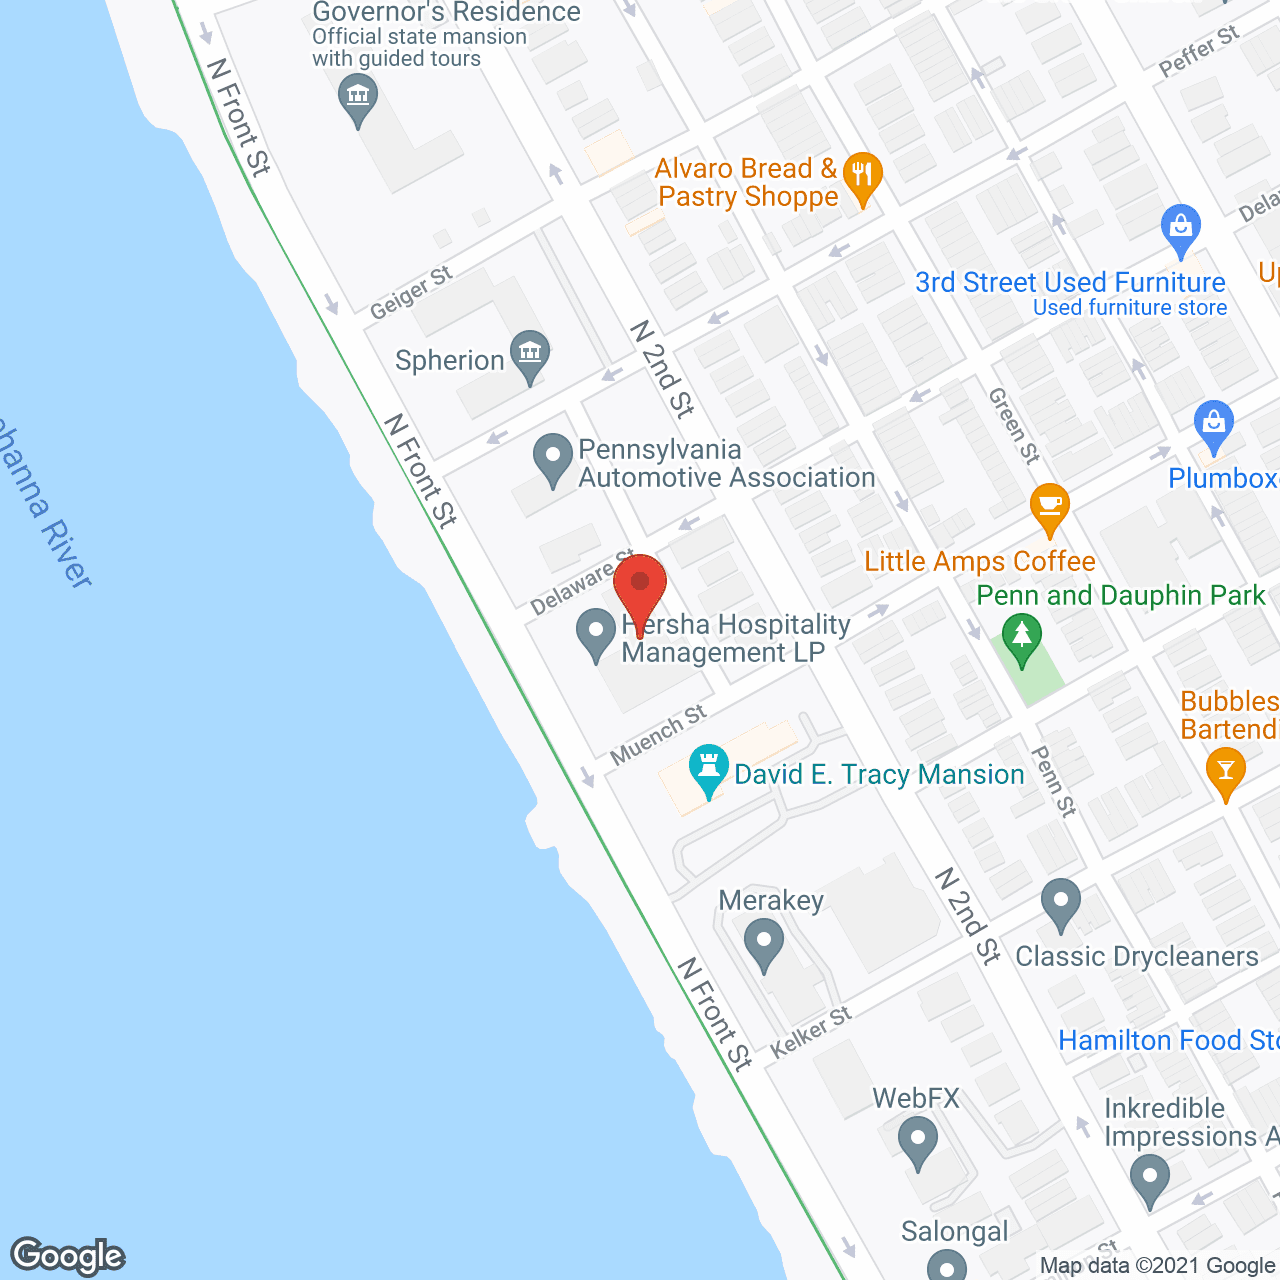 Susquehanna Center in google map